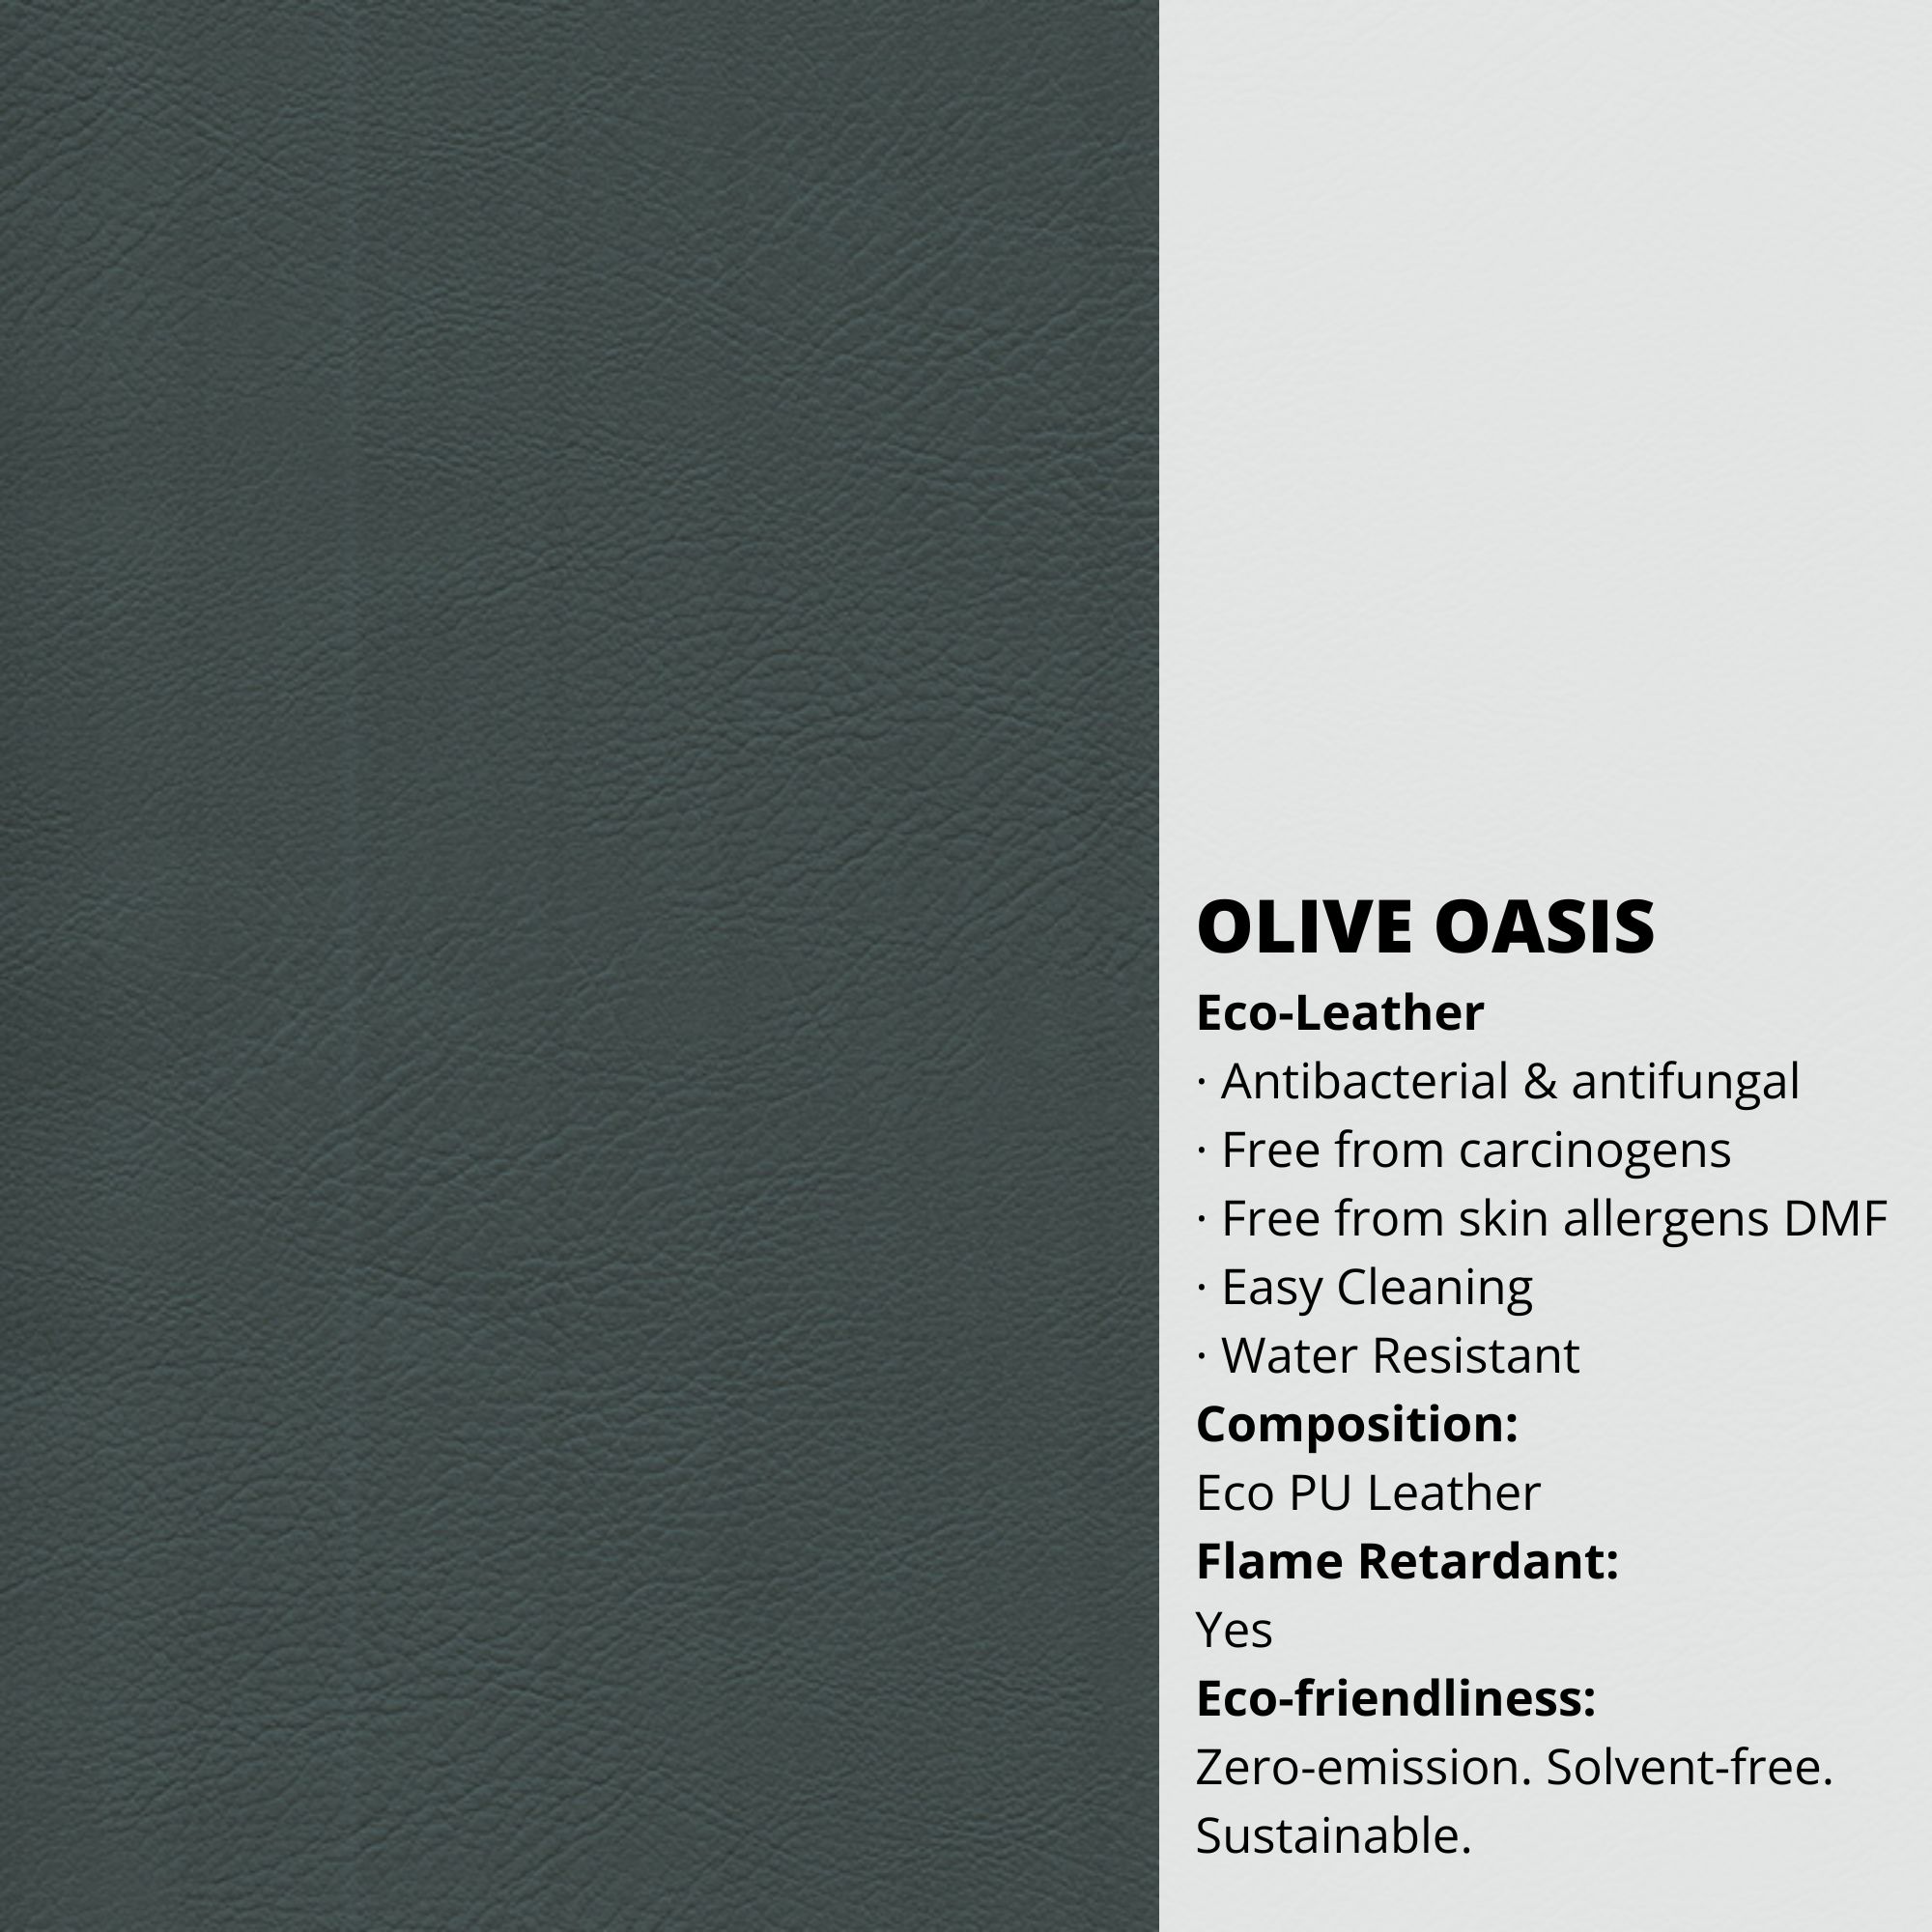 Olive Oasis